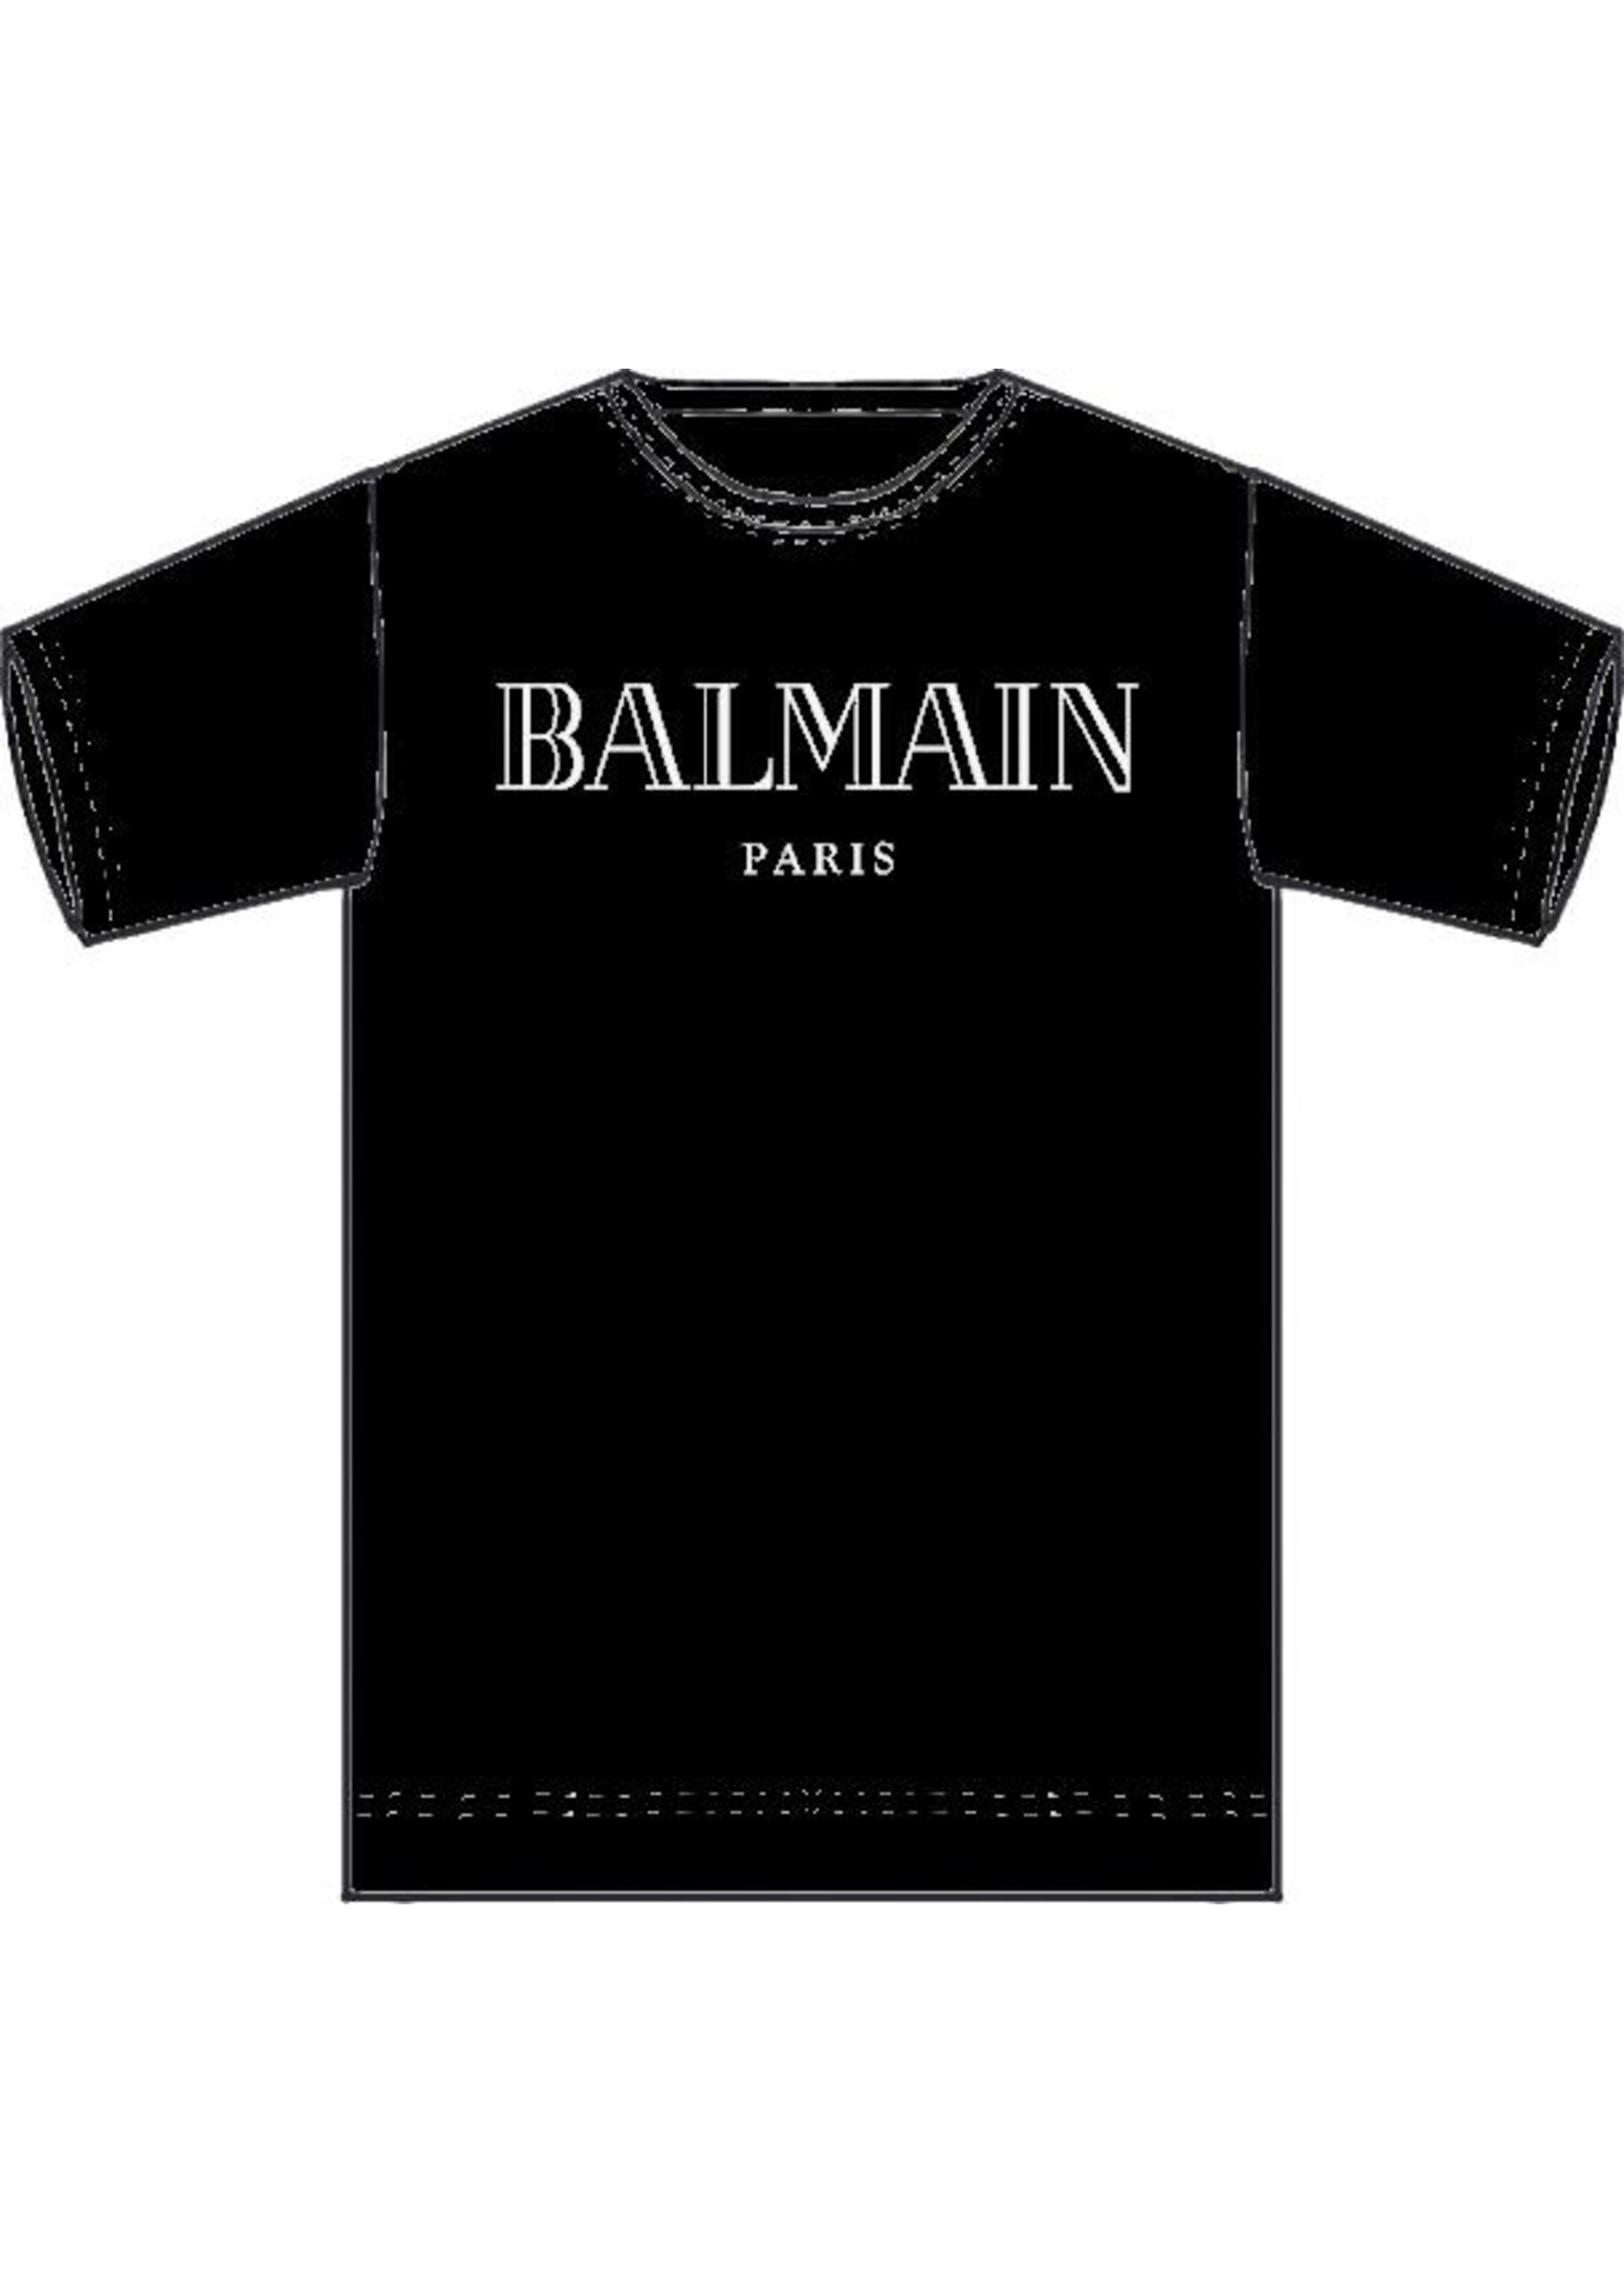 Balmain Balmain T-shirt logo black - M8721